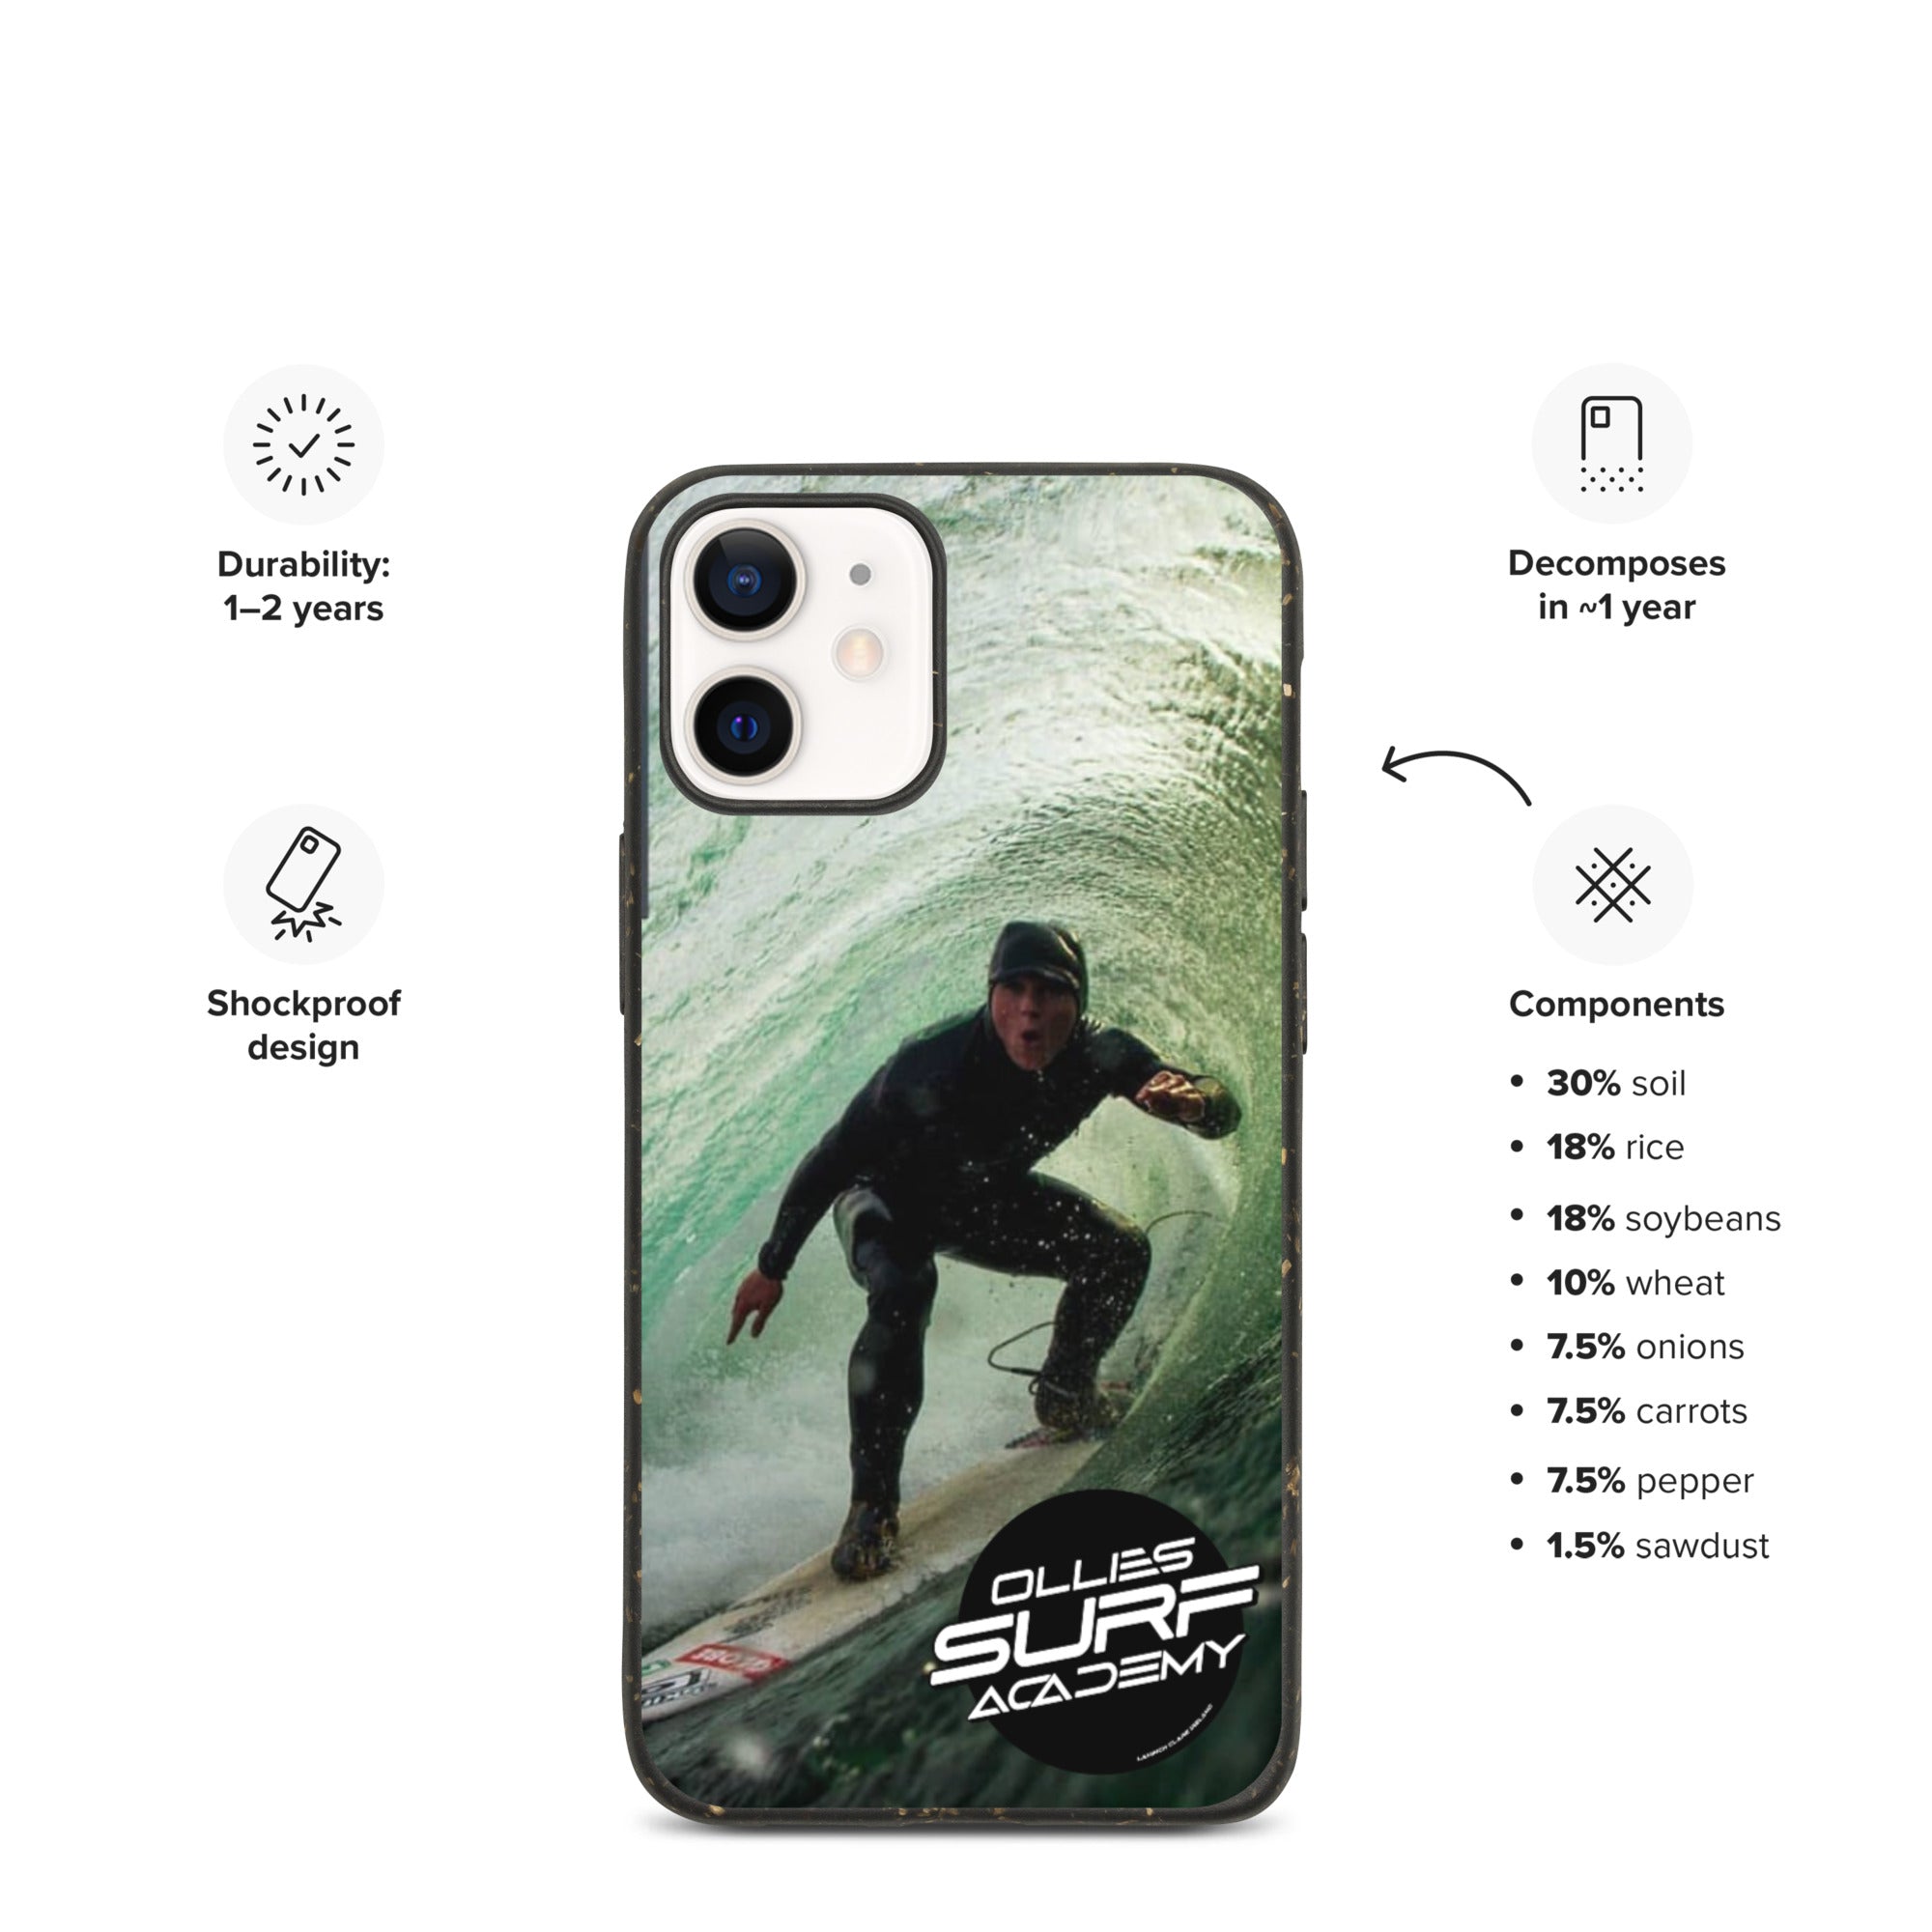 Ollies Surf Academy iPhone case